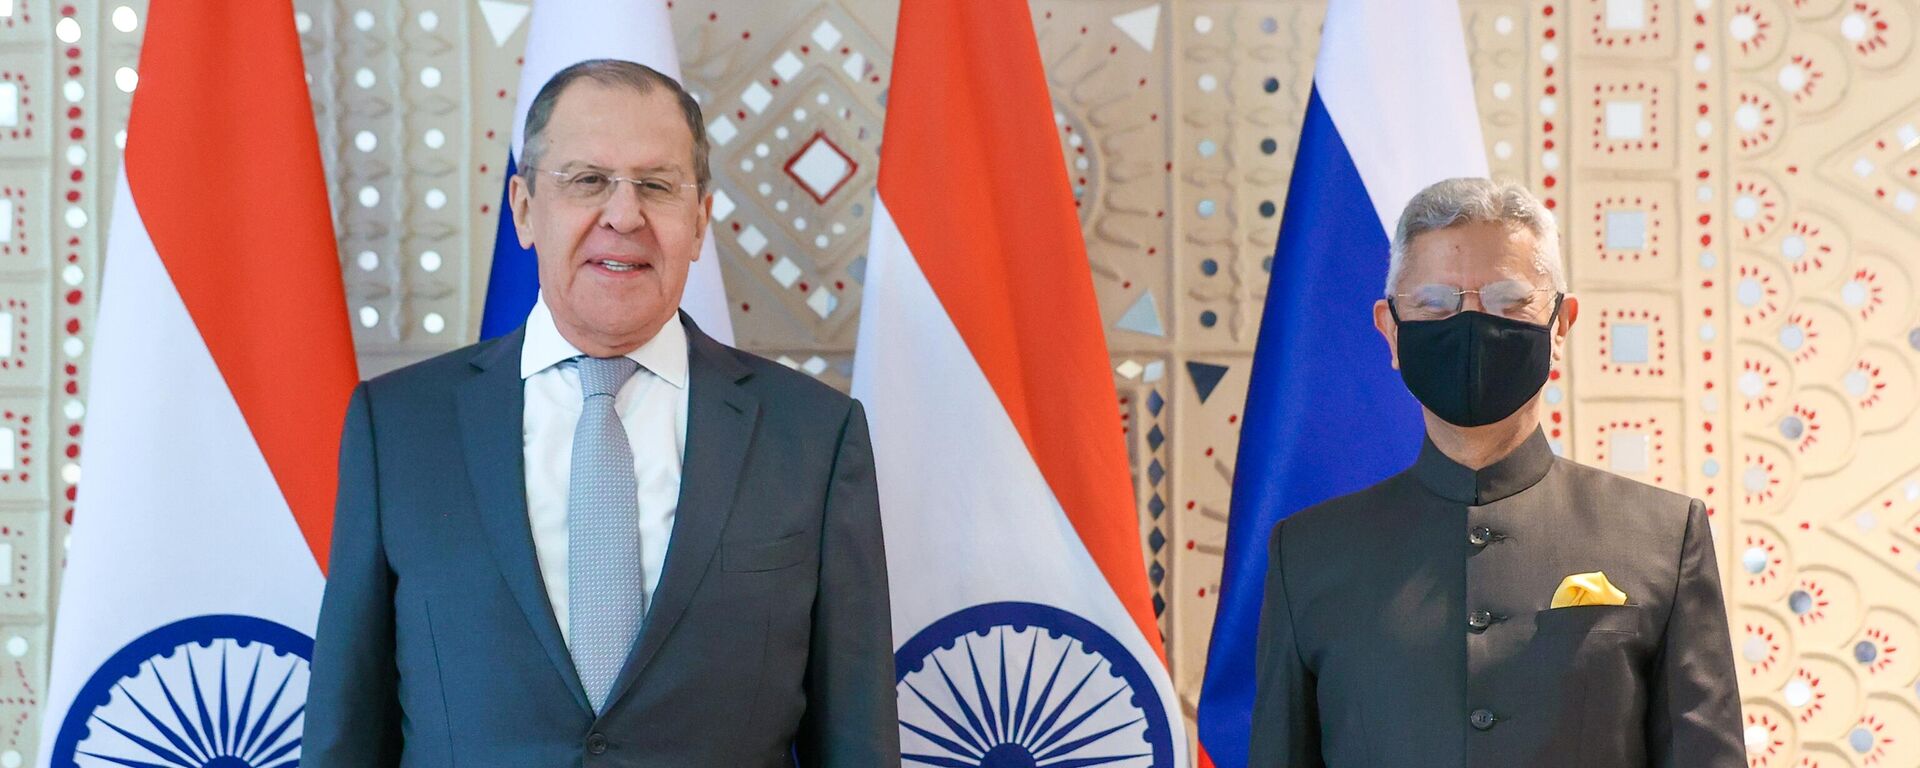 El canciller de Rusia, Serguéi Lavrov, junto a su homólogo indio, Subrahmanyan Jaishankar - Sputnik Mundo, 1920, 01.04.2022